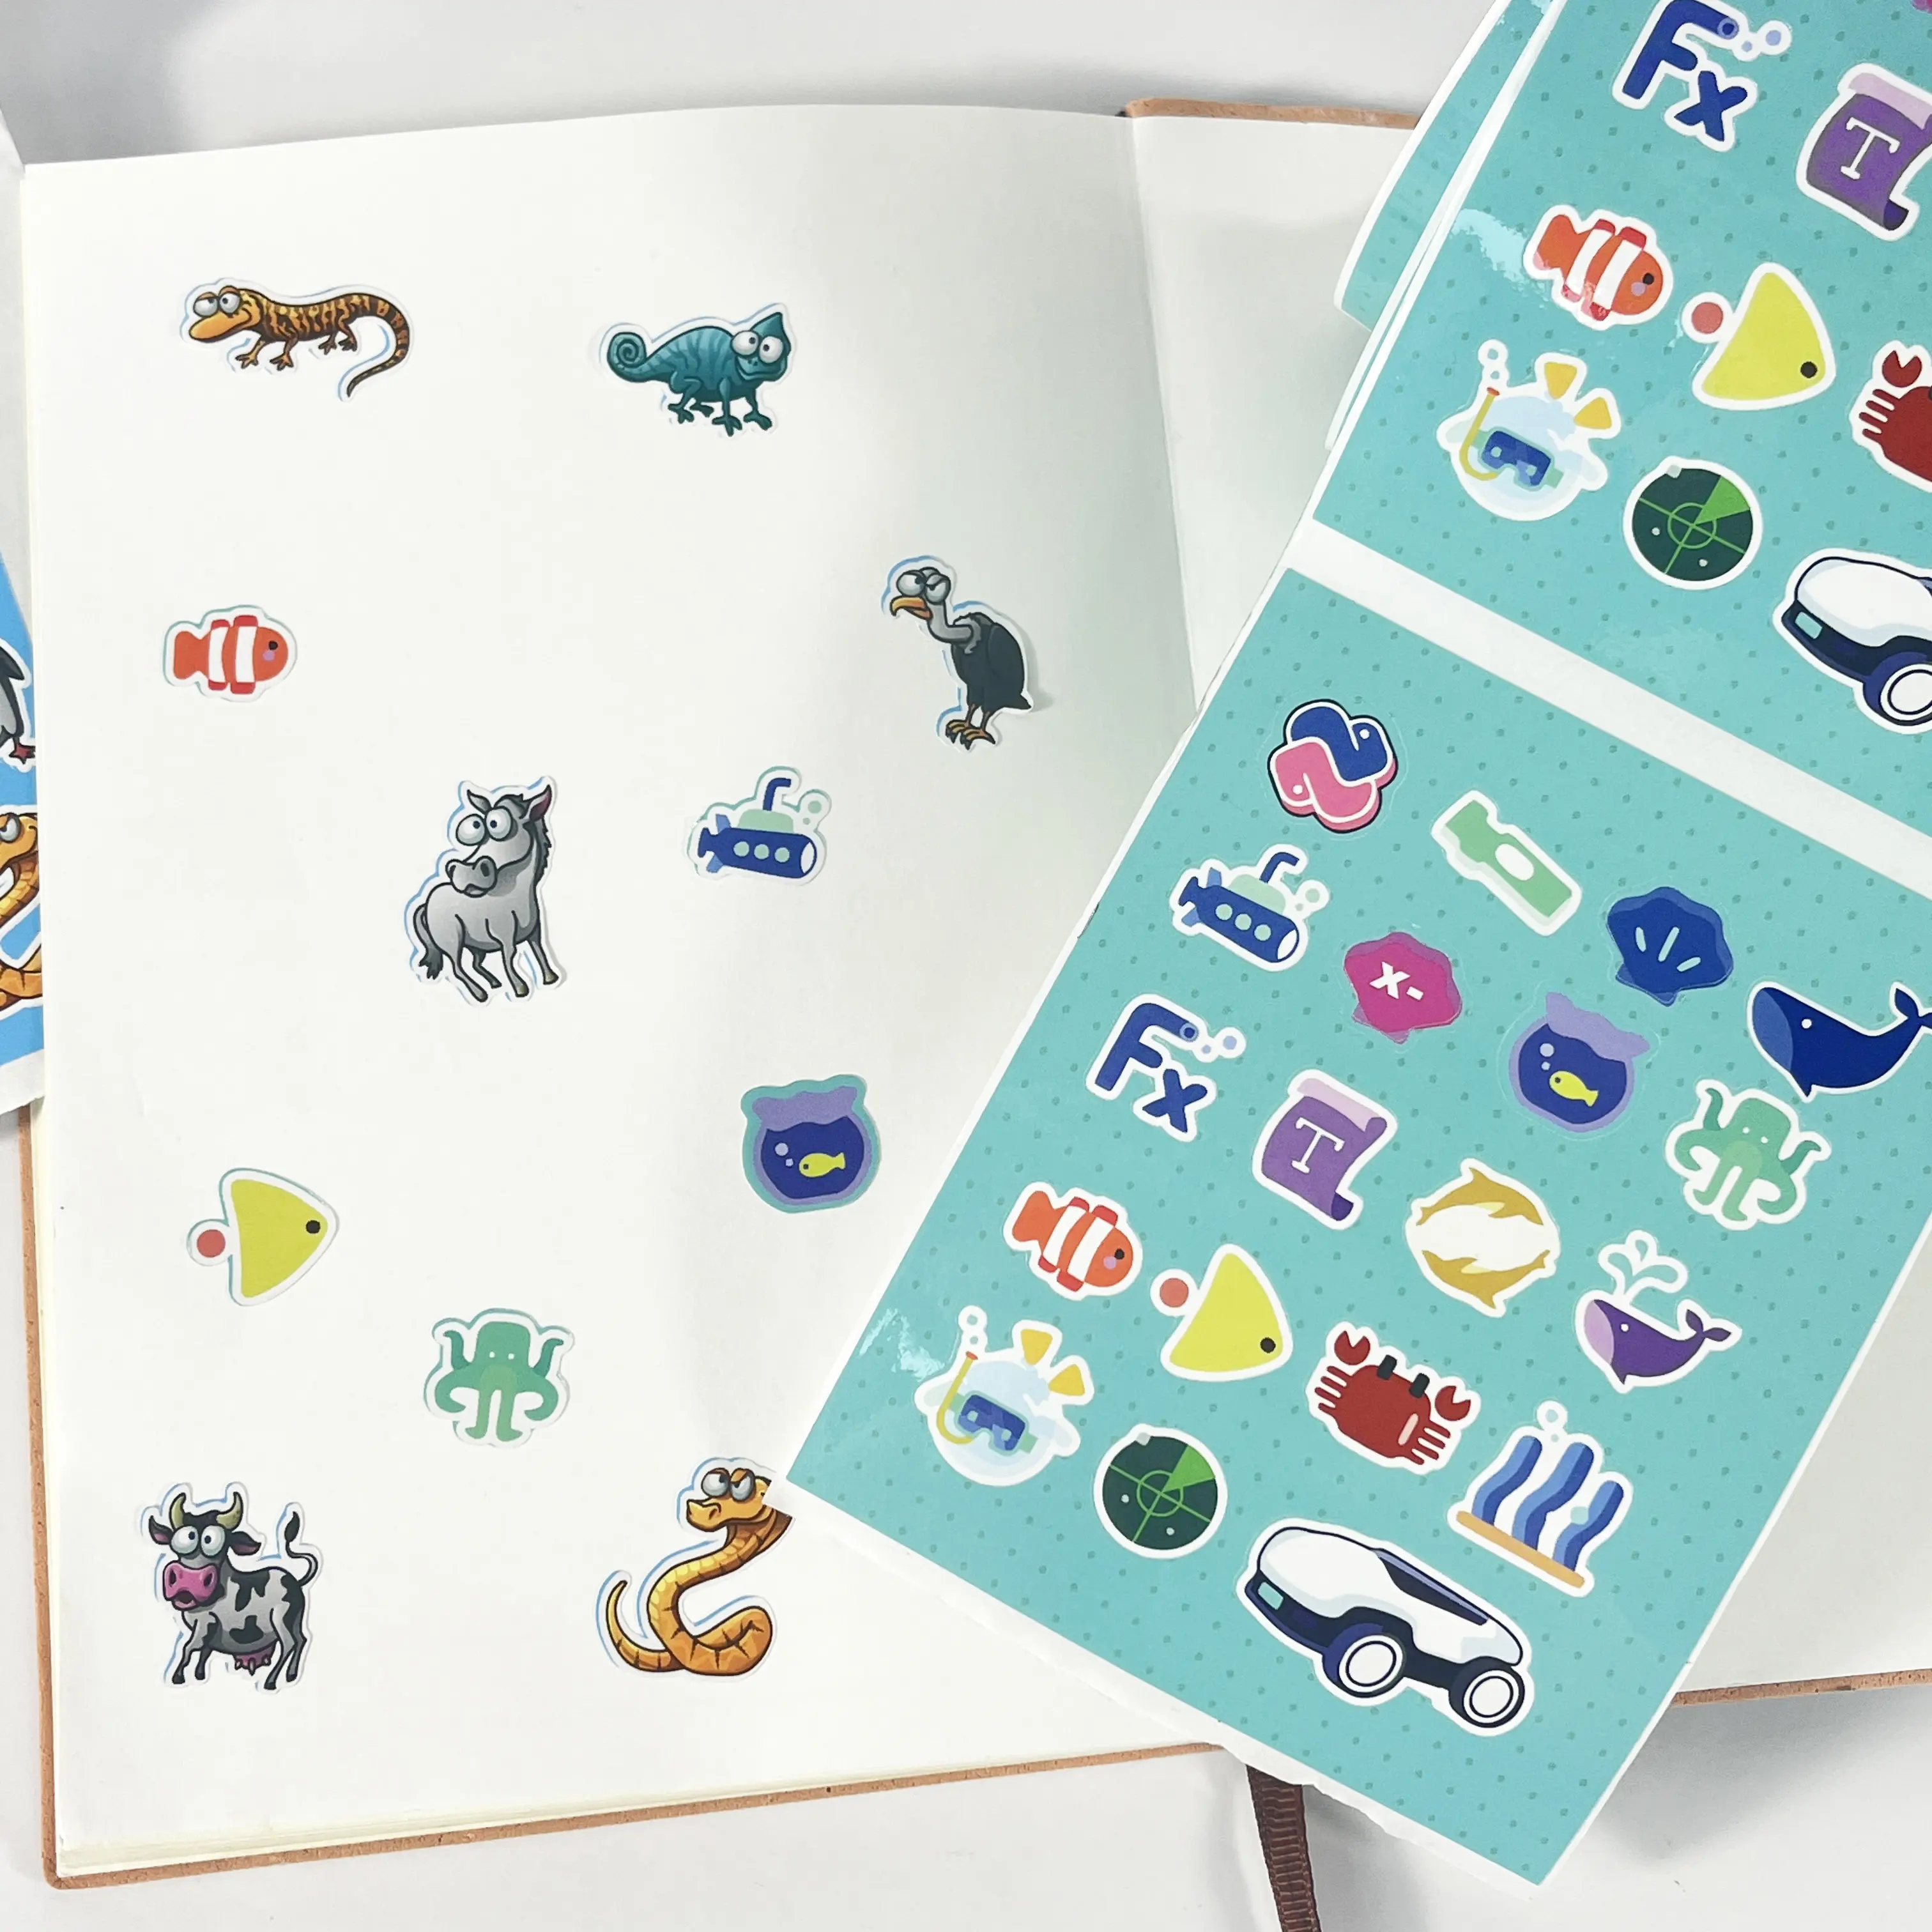 Custom Die Cut Printing Paper Pegatinas Self Adhesive Label Roll Cute Kids Cartoon Characters Stickers For Children Cartoon